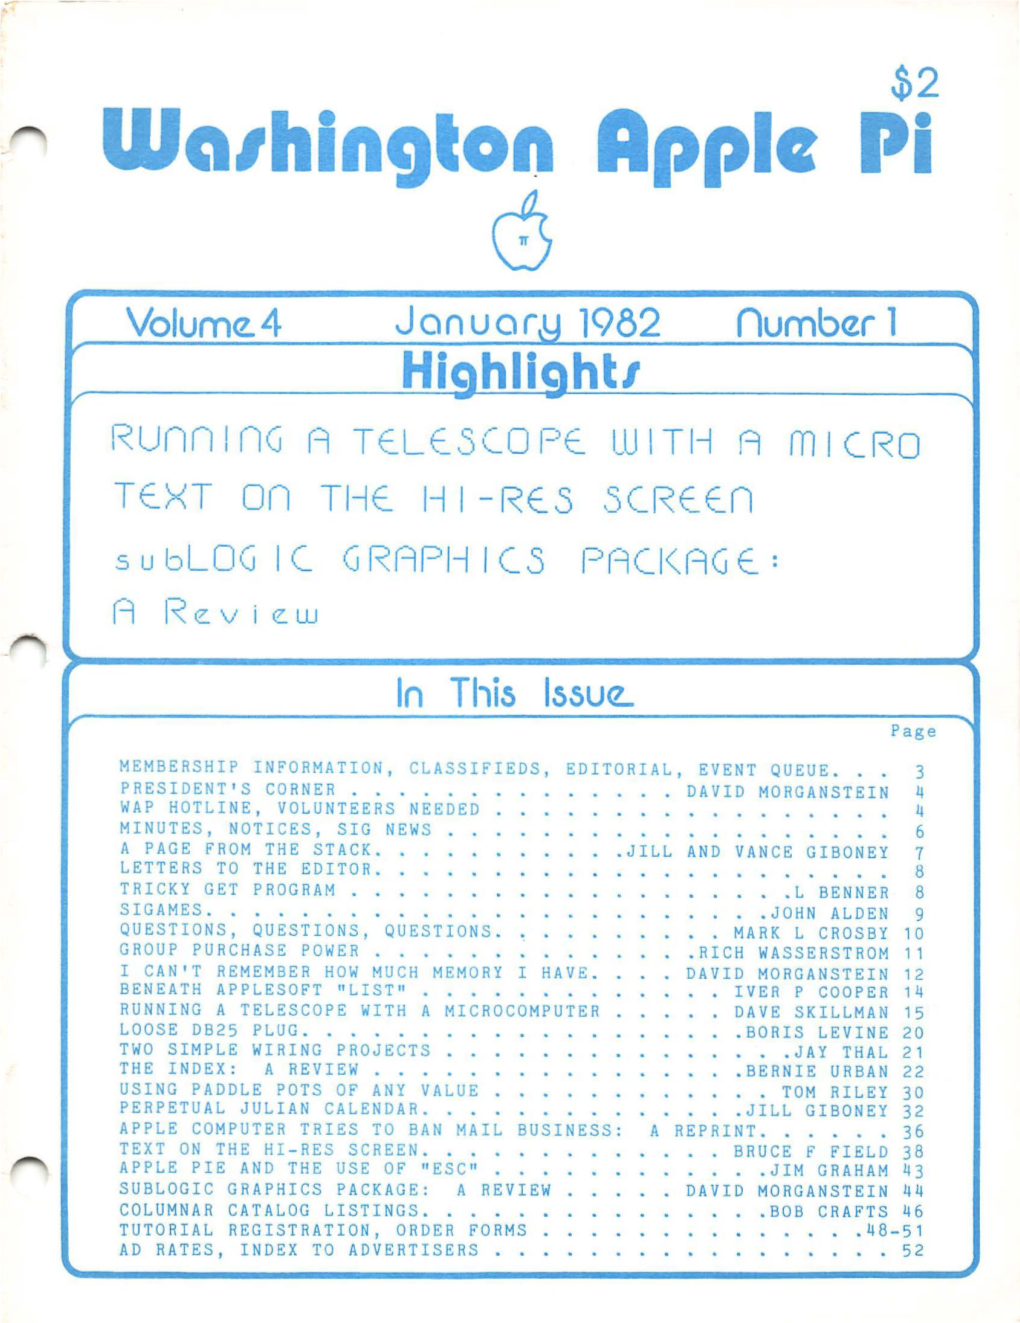 Washington Apple Pi Journal, Volume 4, Number 1